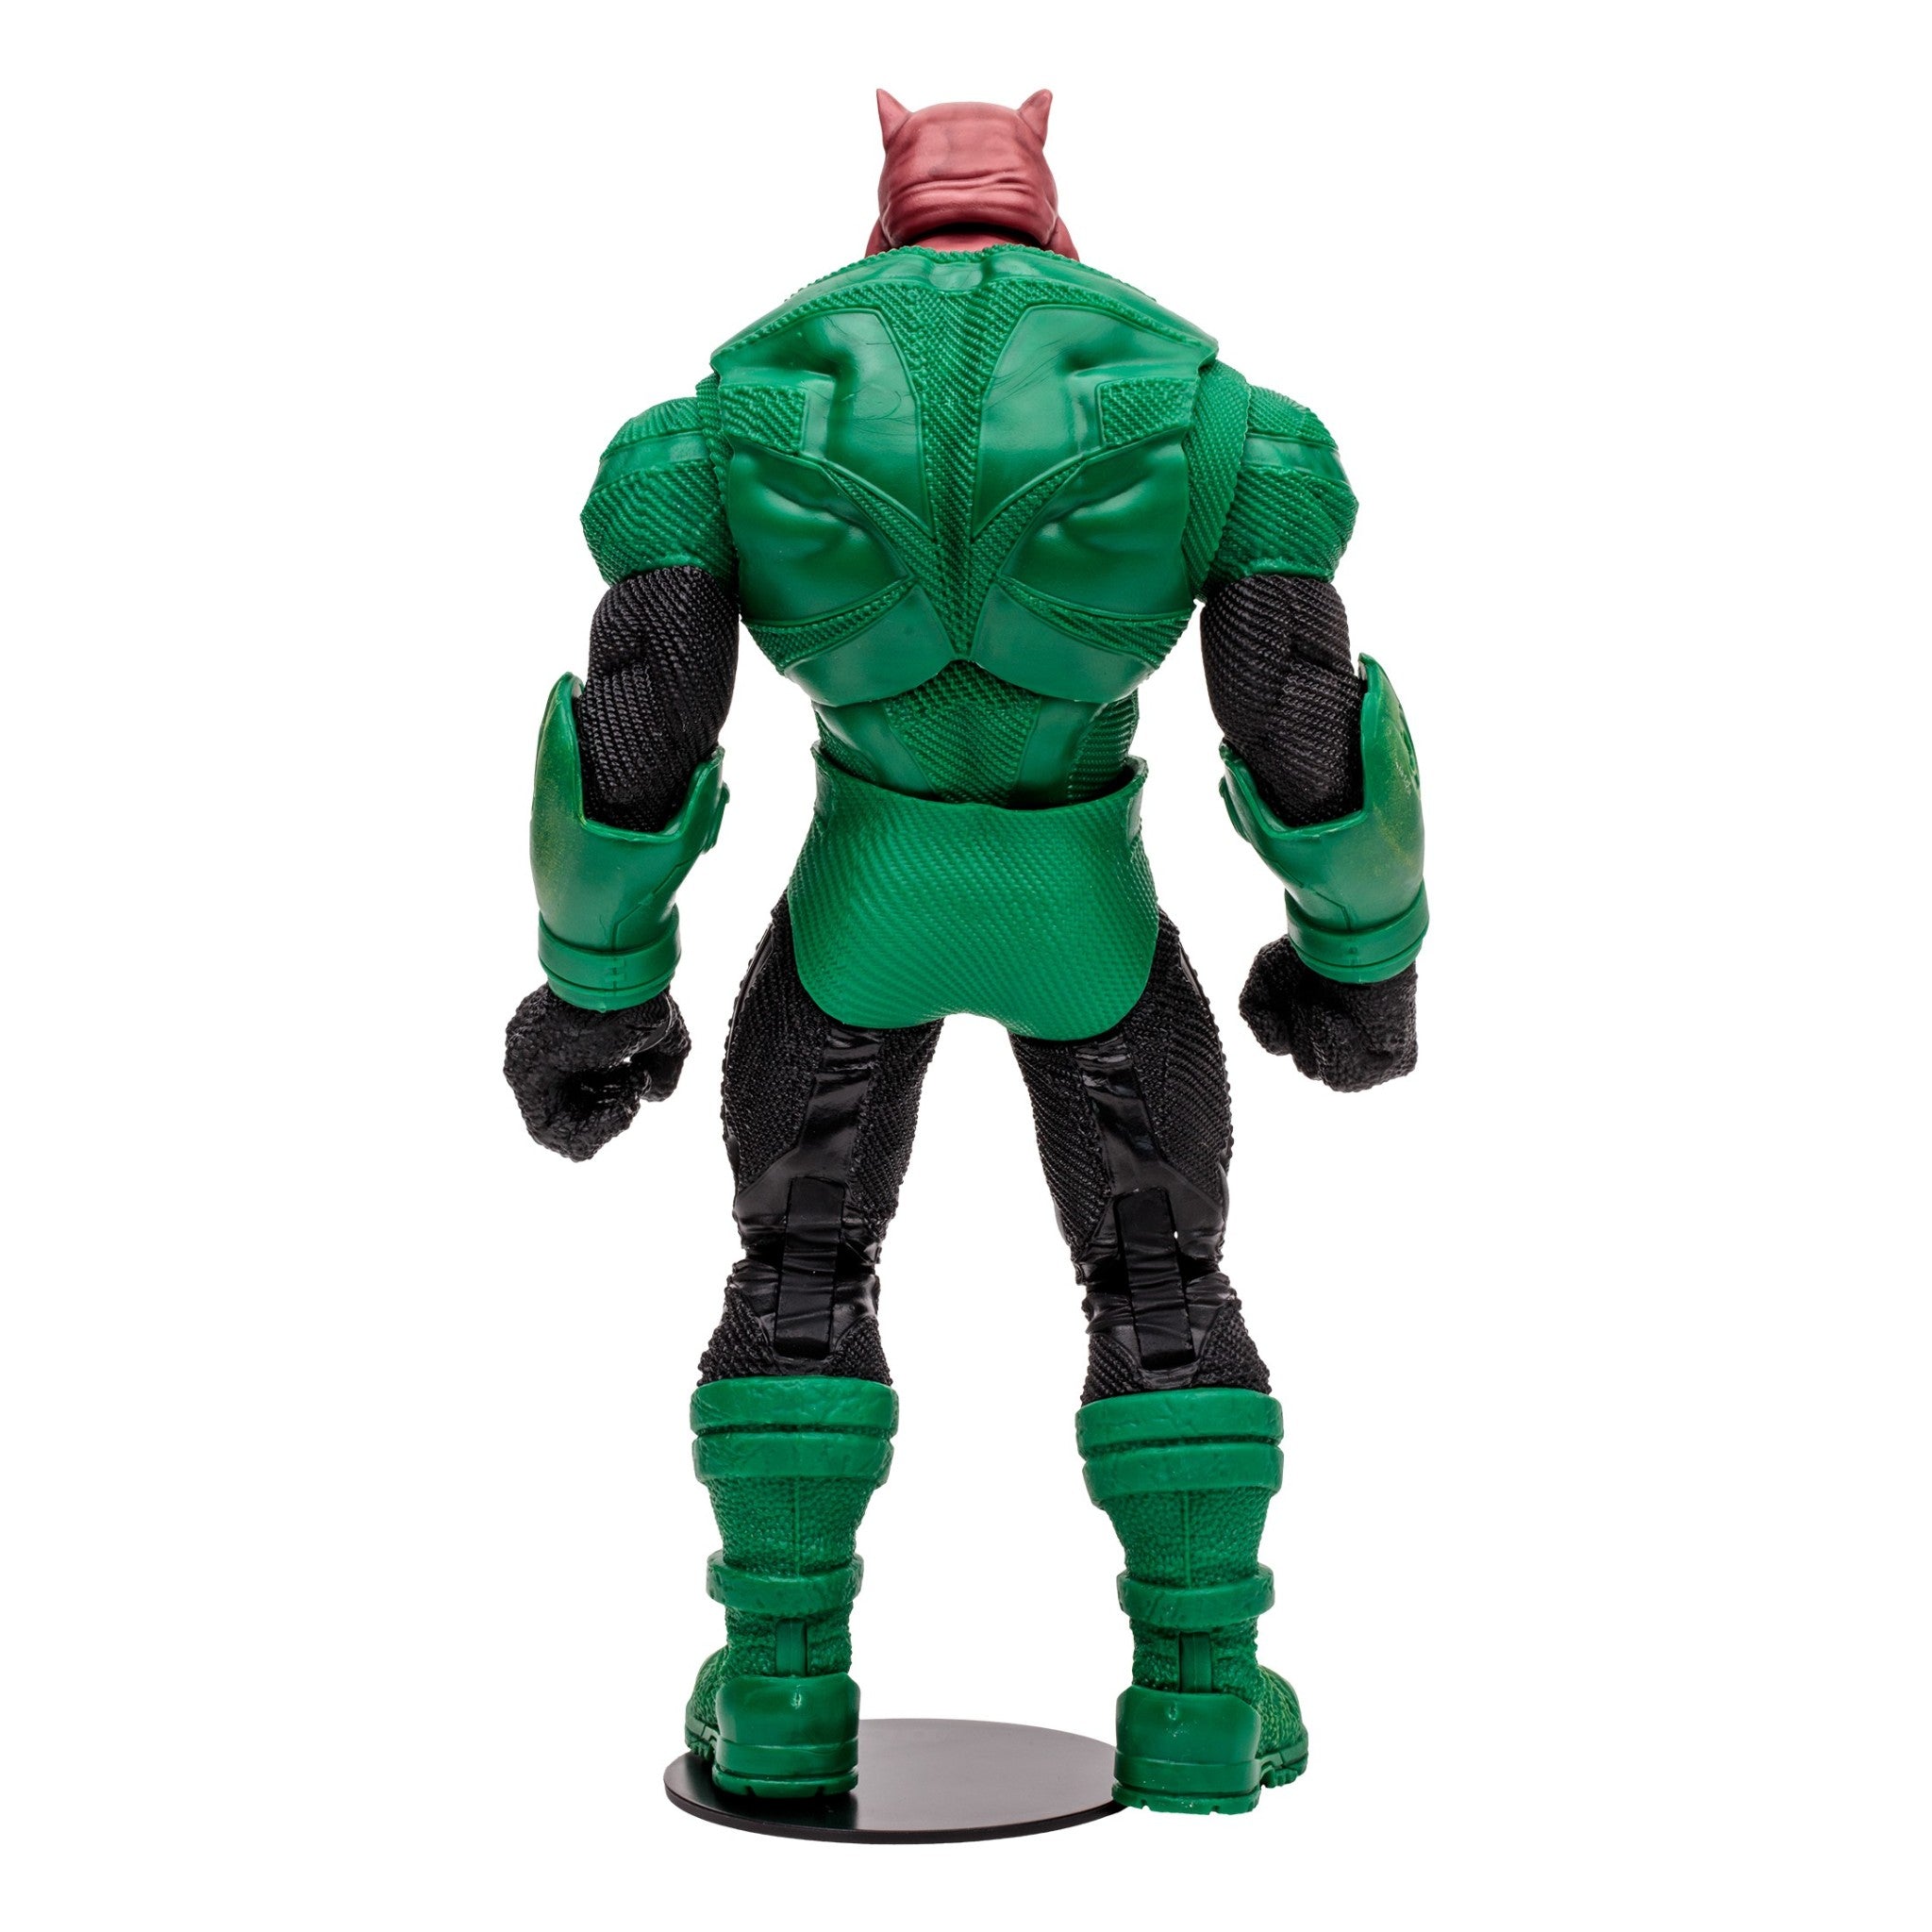 DC Multiverse Kilowog vs Green Lantern 2 Pack Gold Label - McFarlane Toys